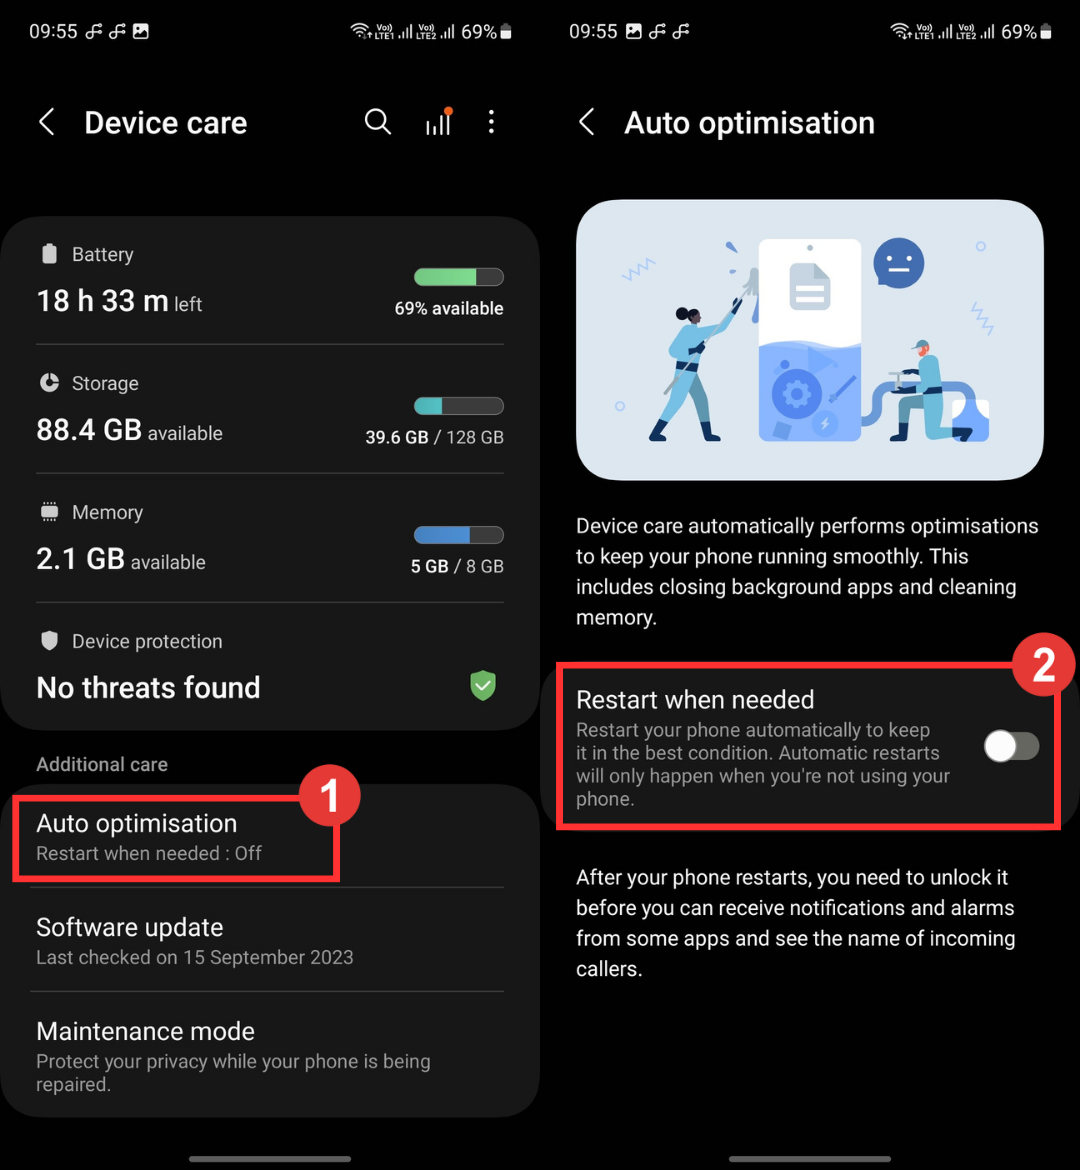 Auto optimisation feature in Samsung